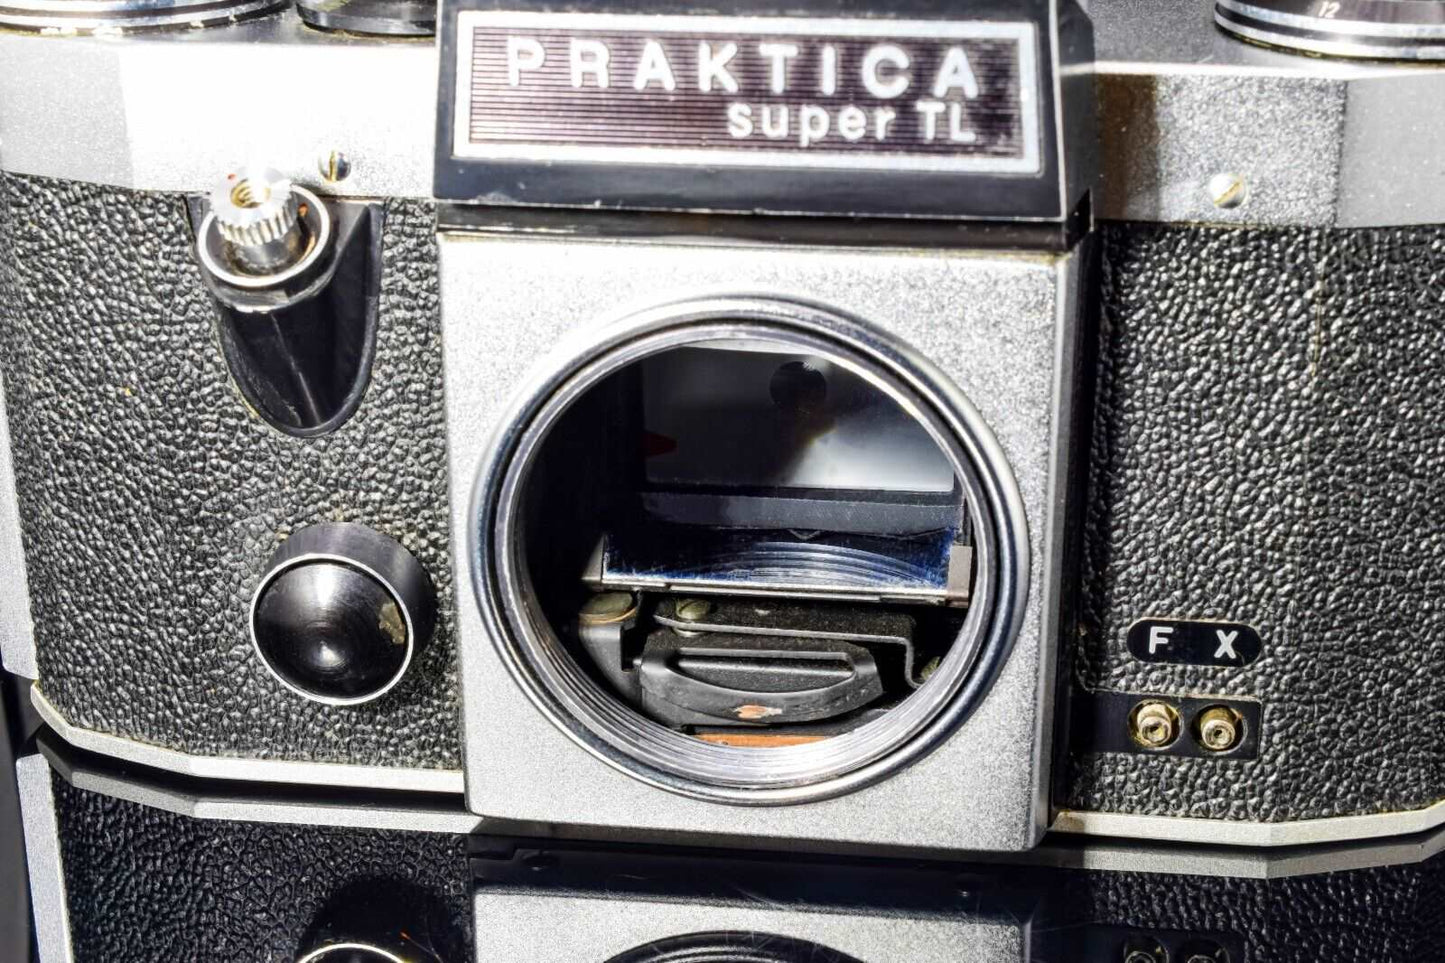 PRAKTICA super TL Black Silver 35mm Film Camera with Pentacon f3.5 30mm Lens